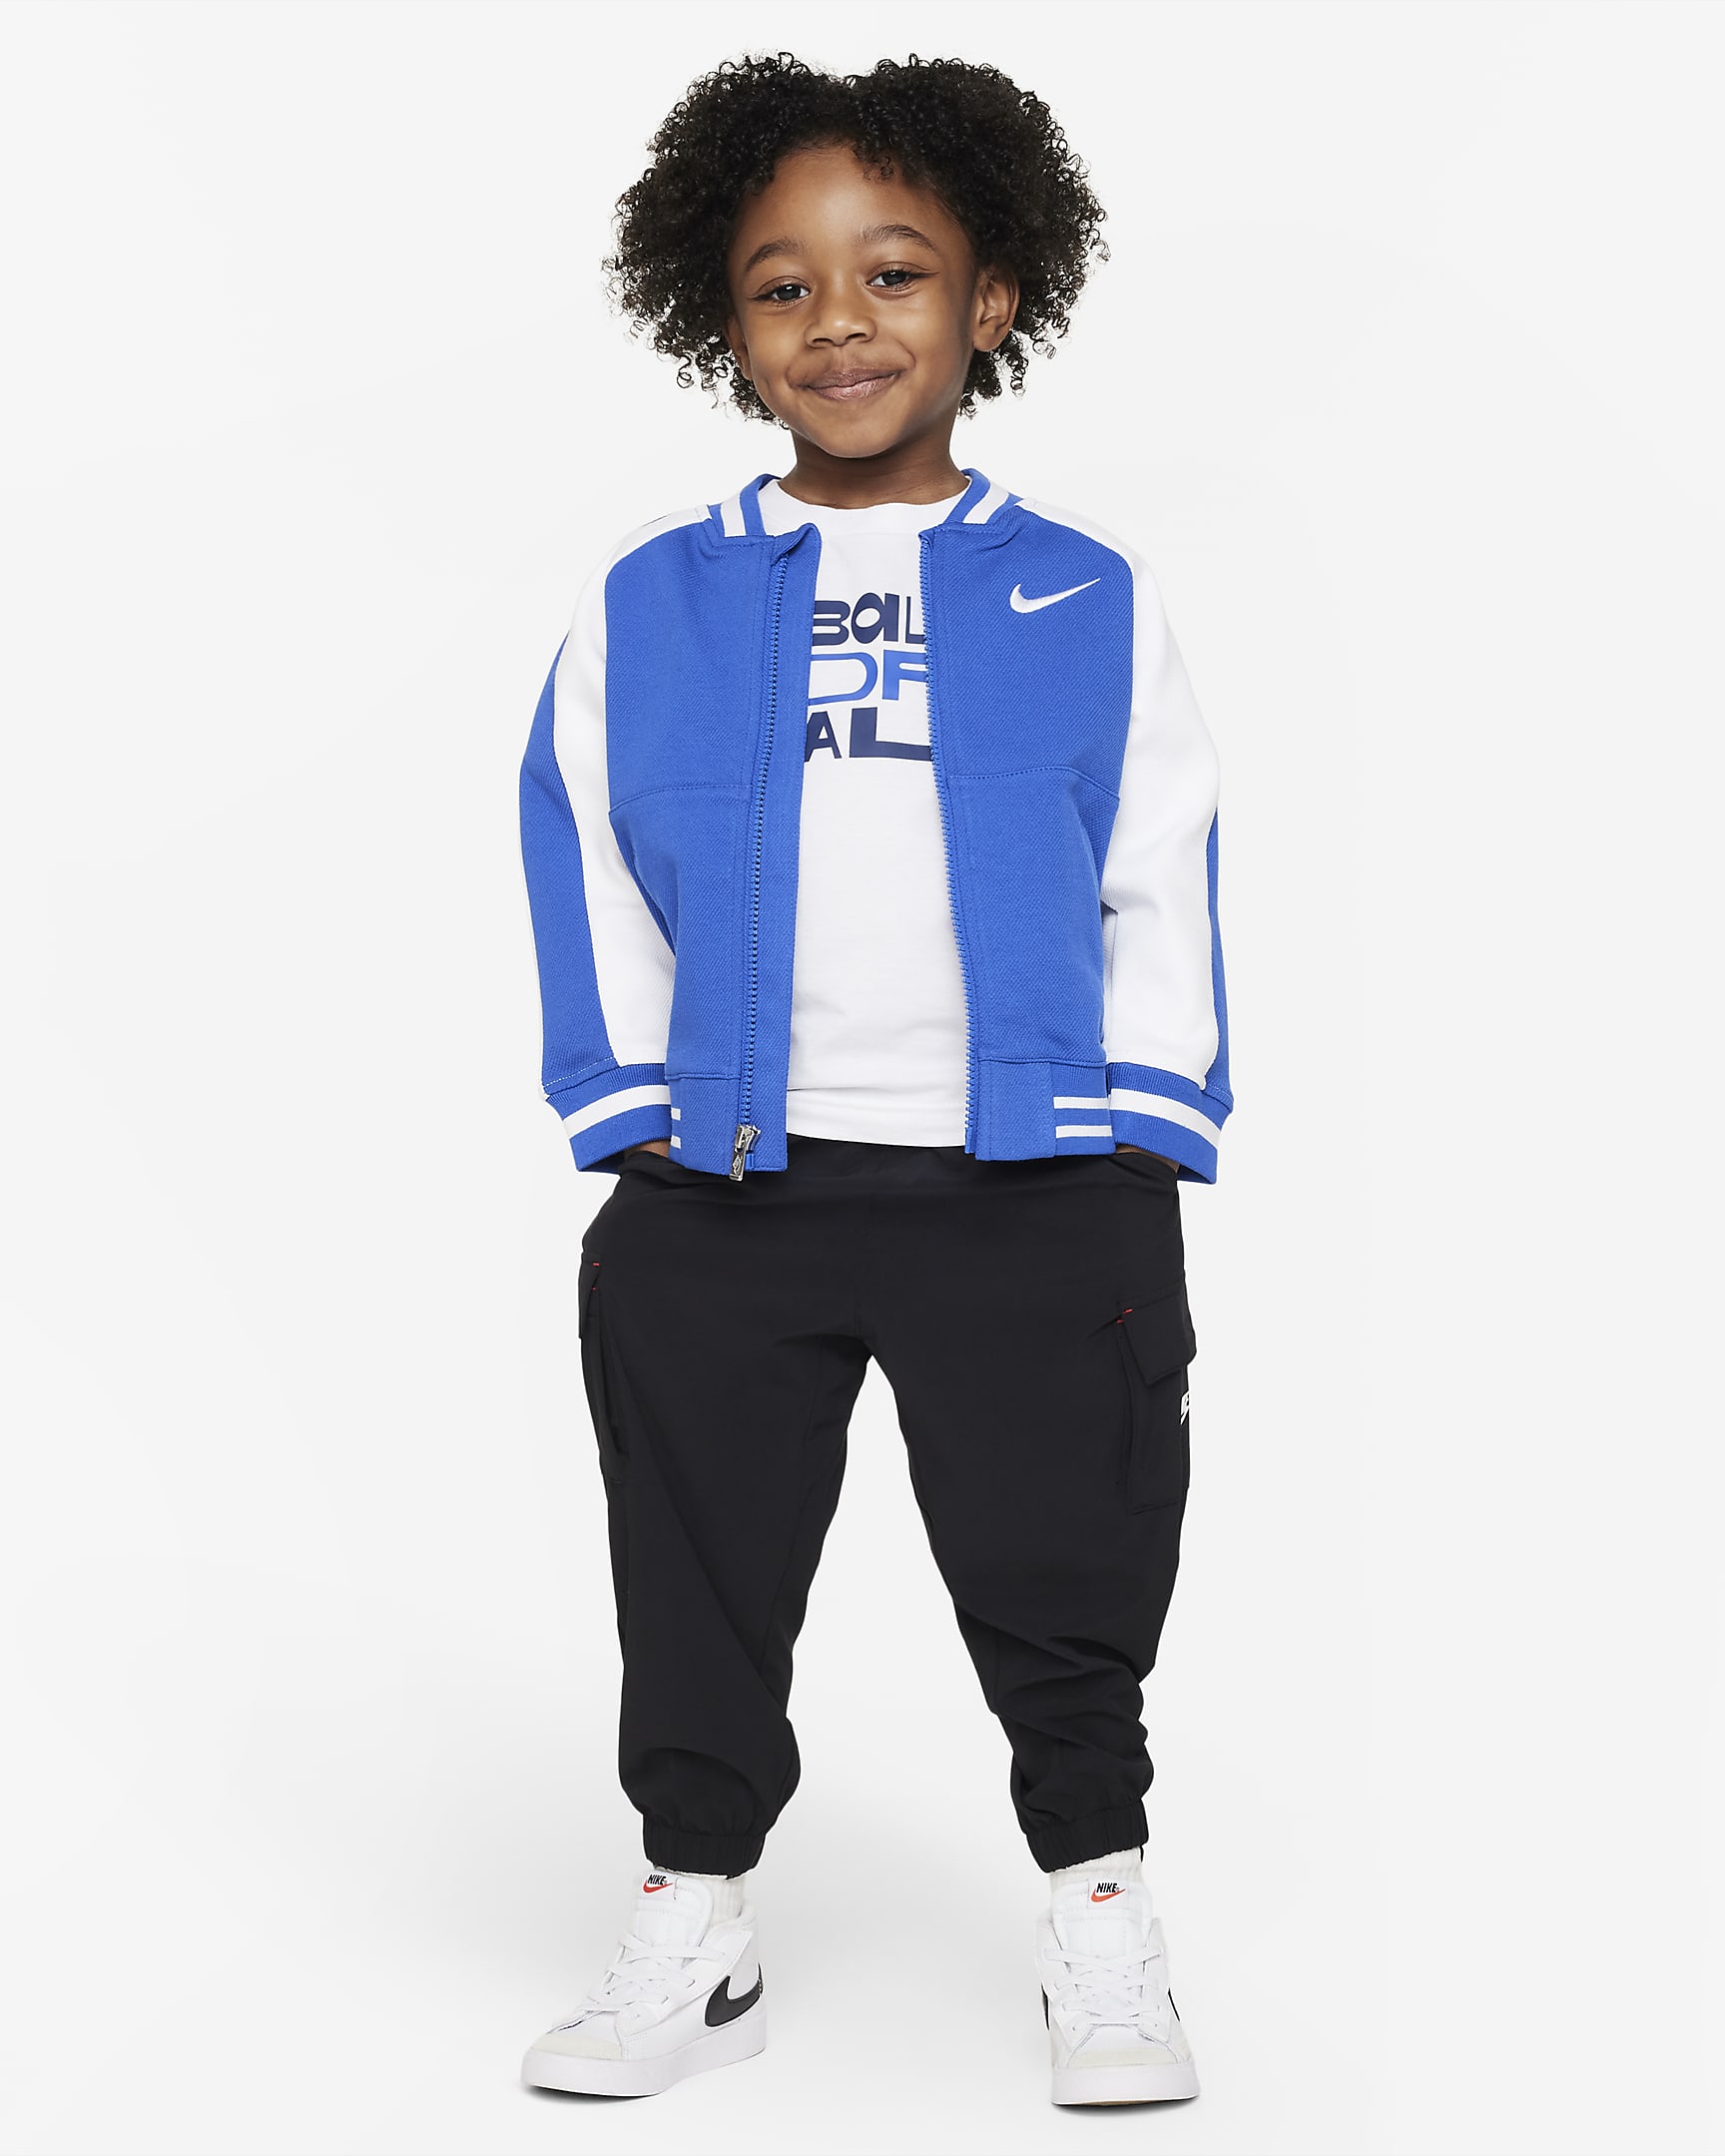 Playera infantil Nike Elite Tee - Blanco